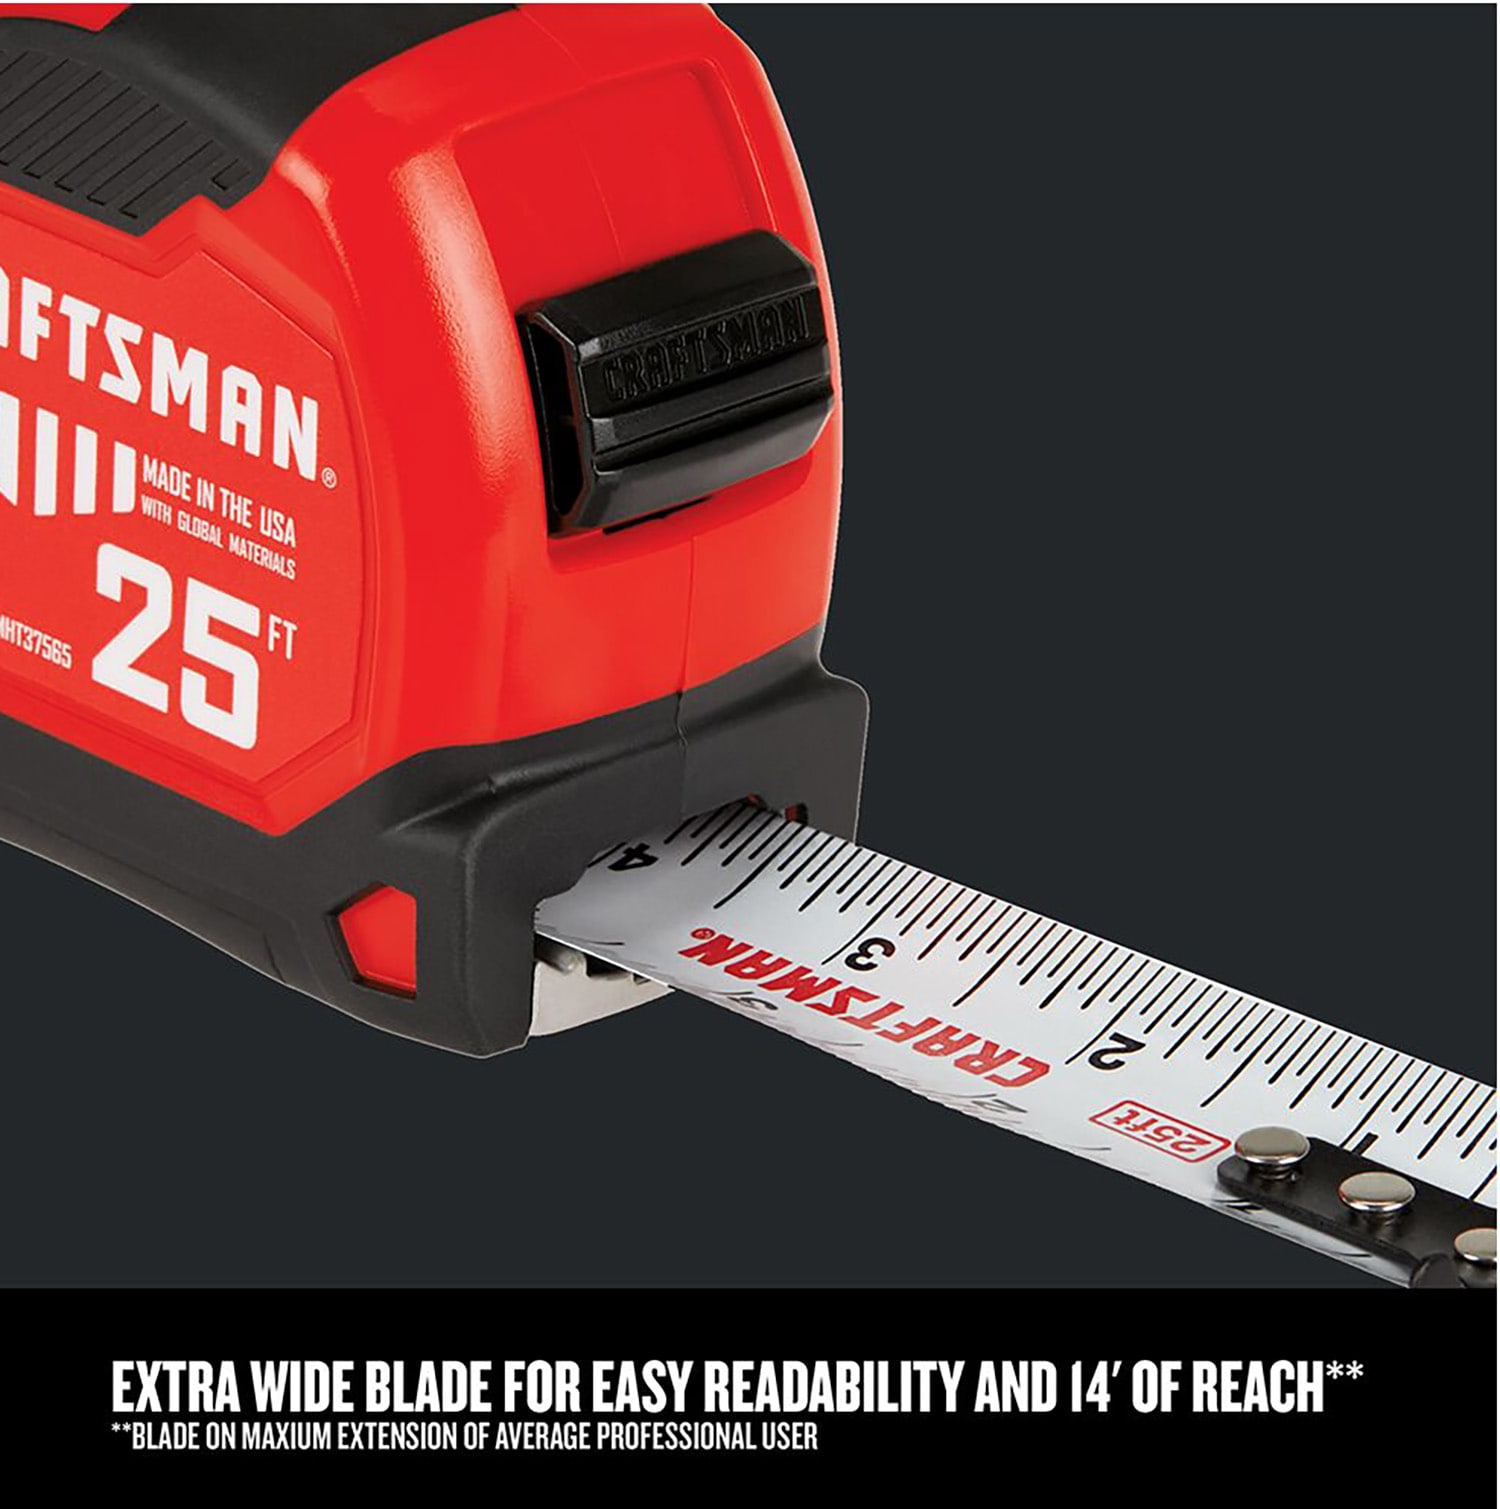 Craftsman Sidewinder Tape Measure 25' Won't Tip Auto Lock Write-On - tools  - by owner - sale - craigslist